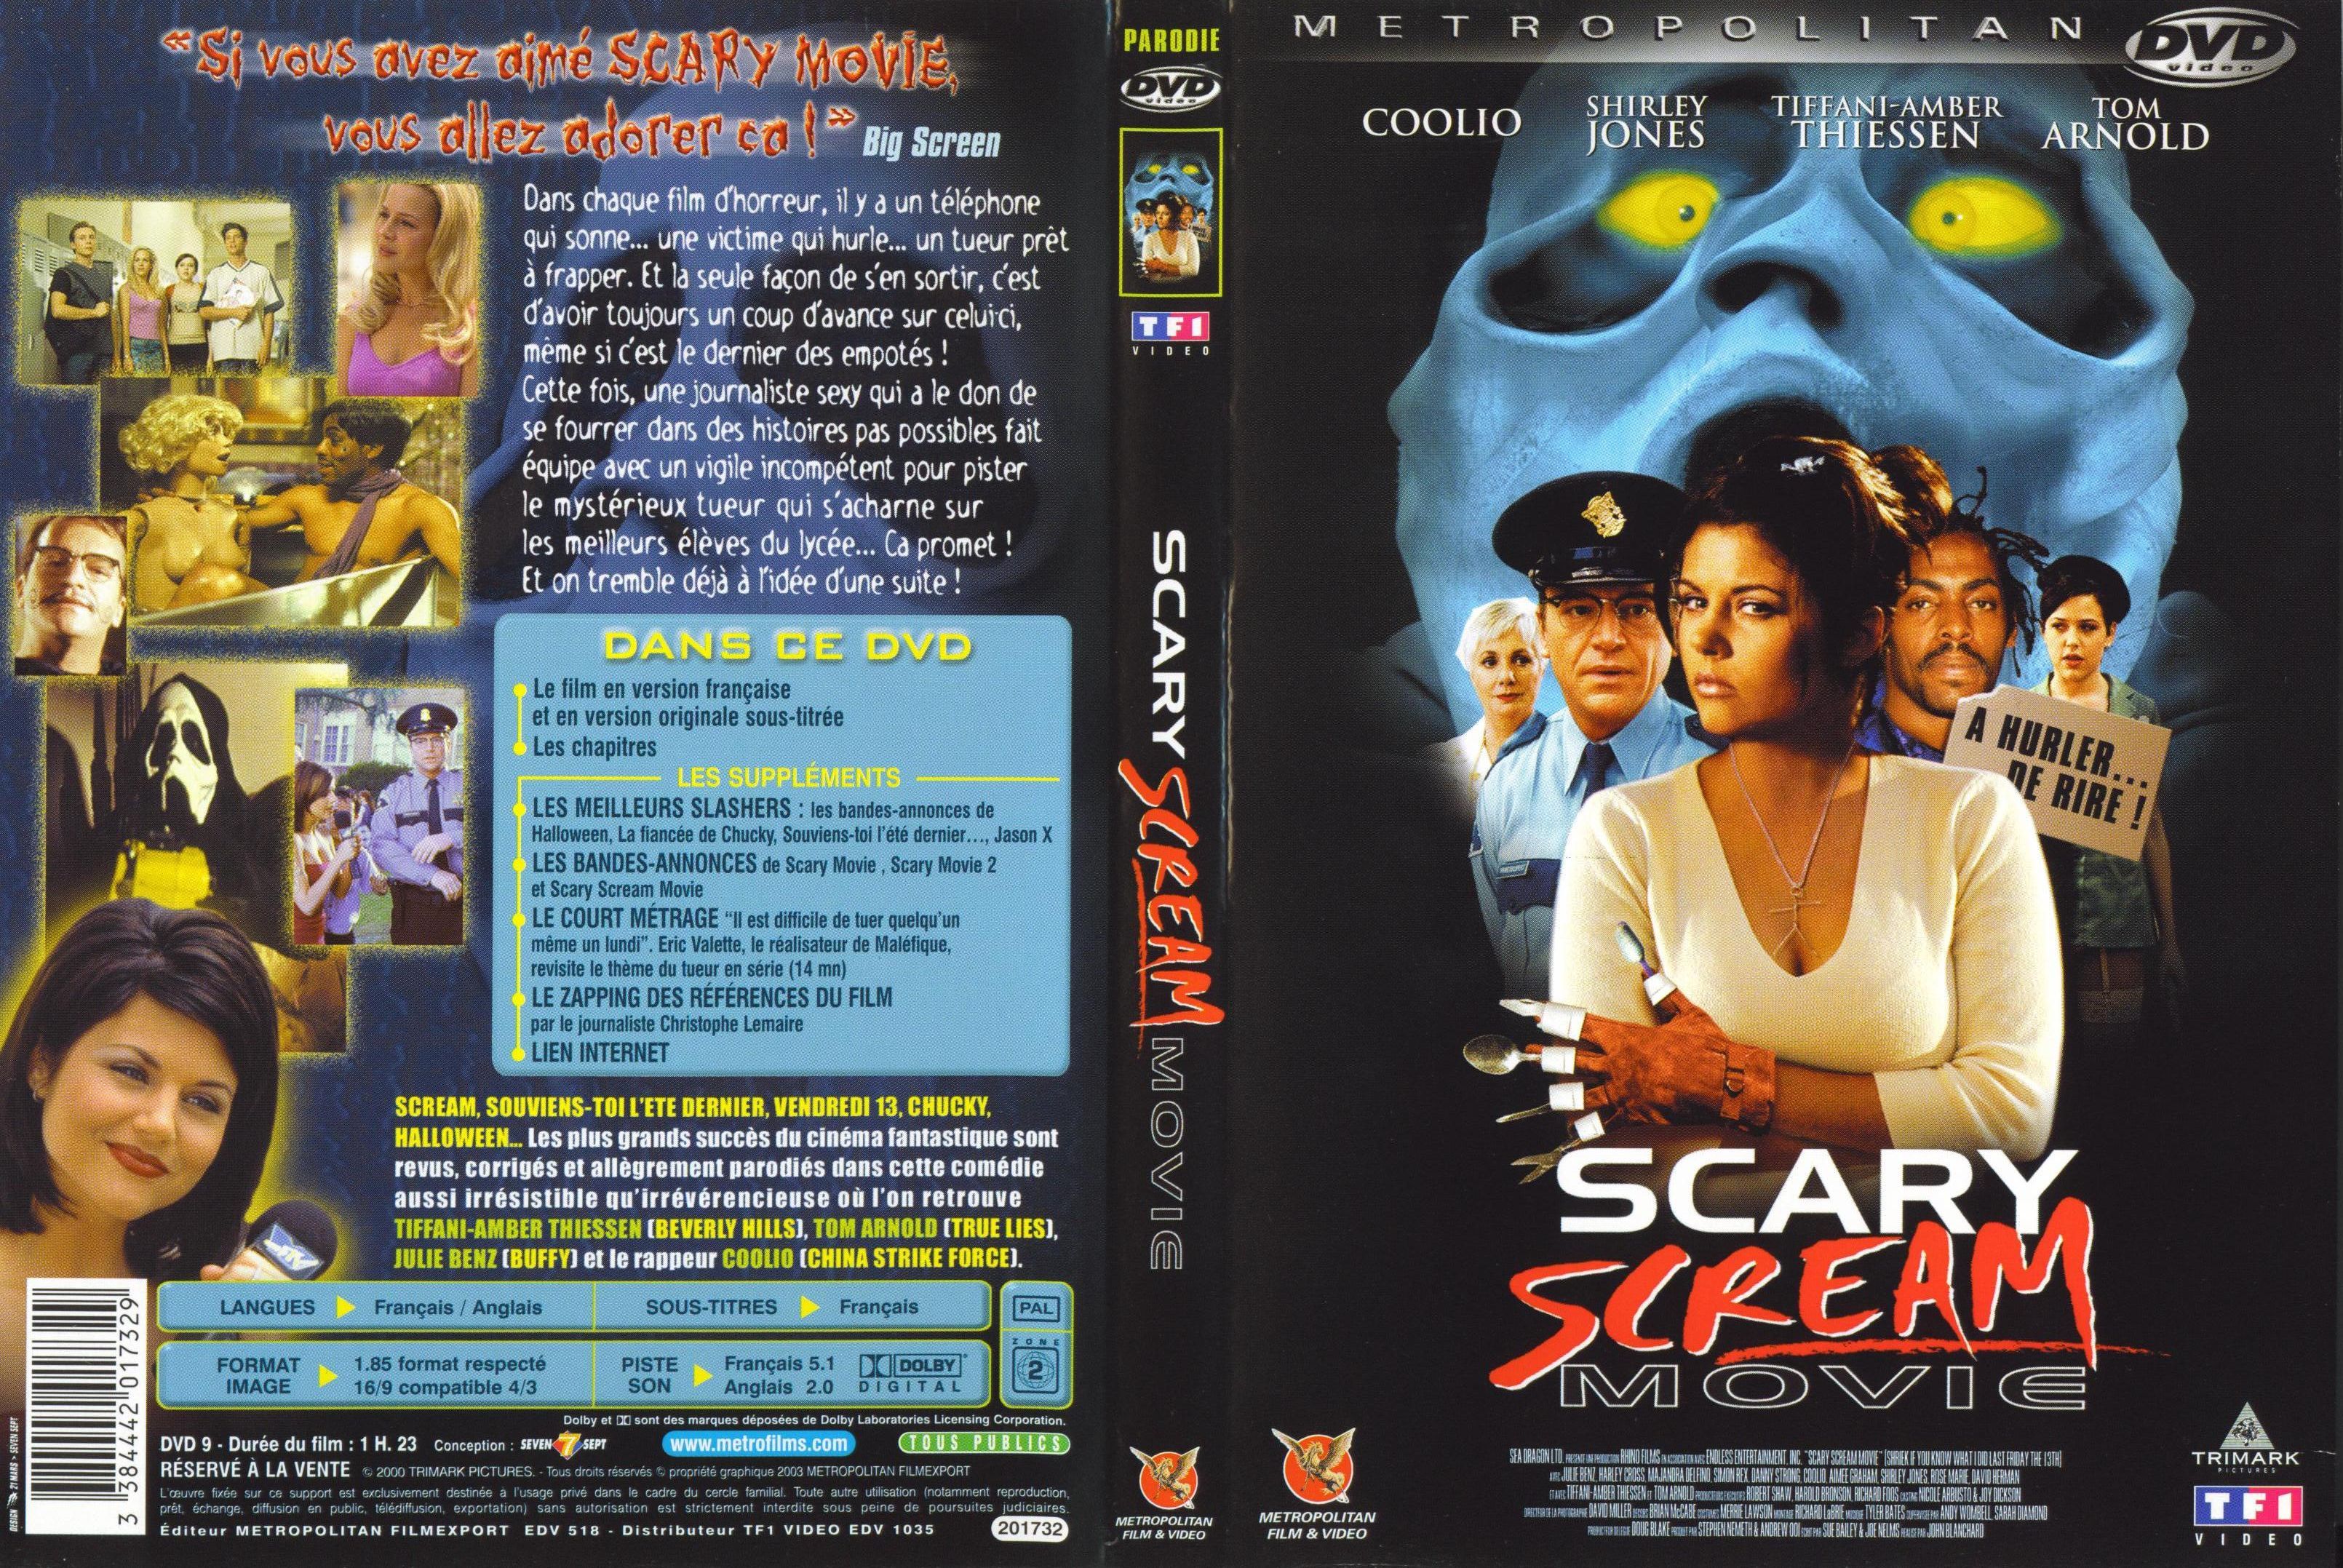 Jaquette DVD Scary scream movie